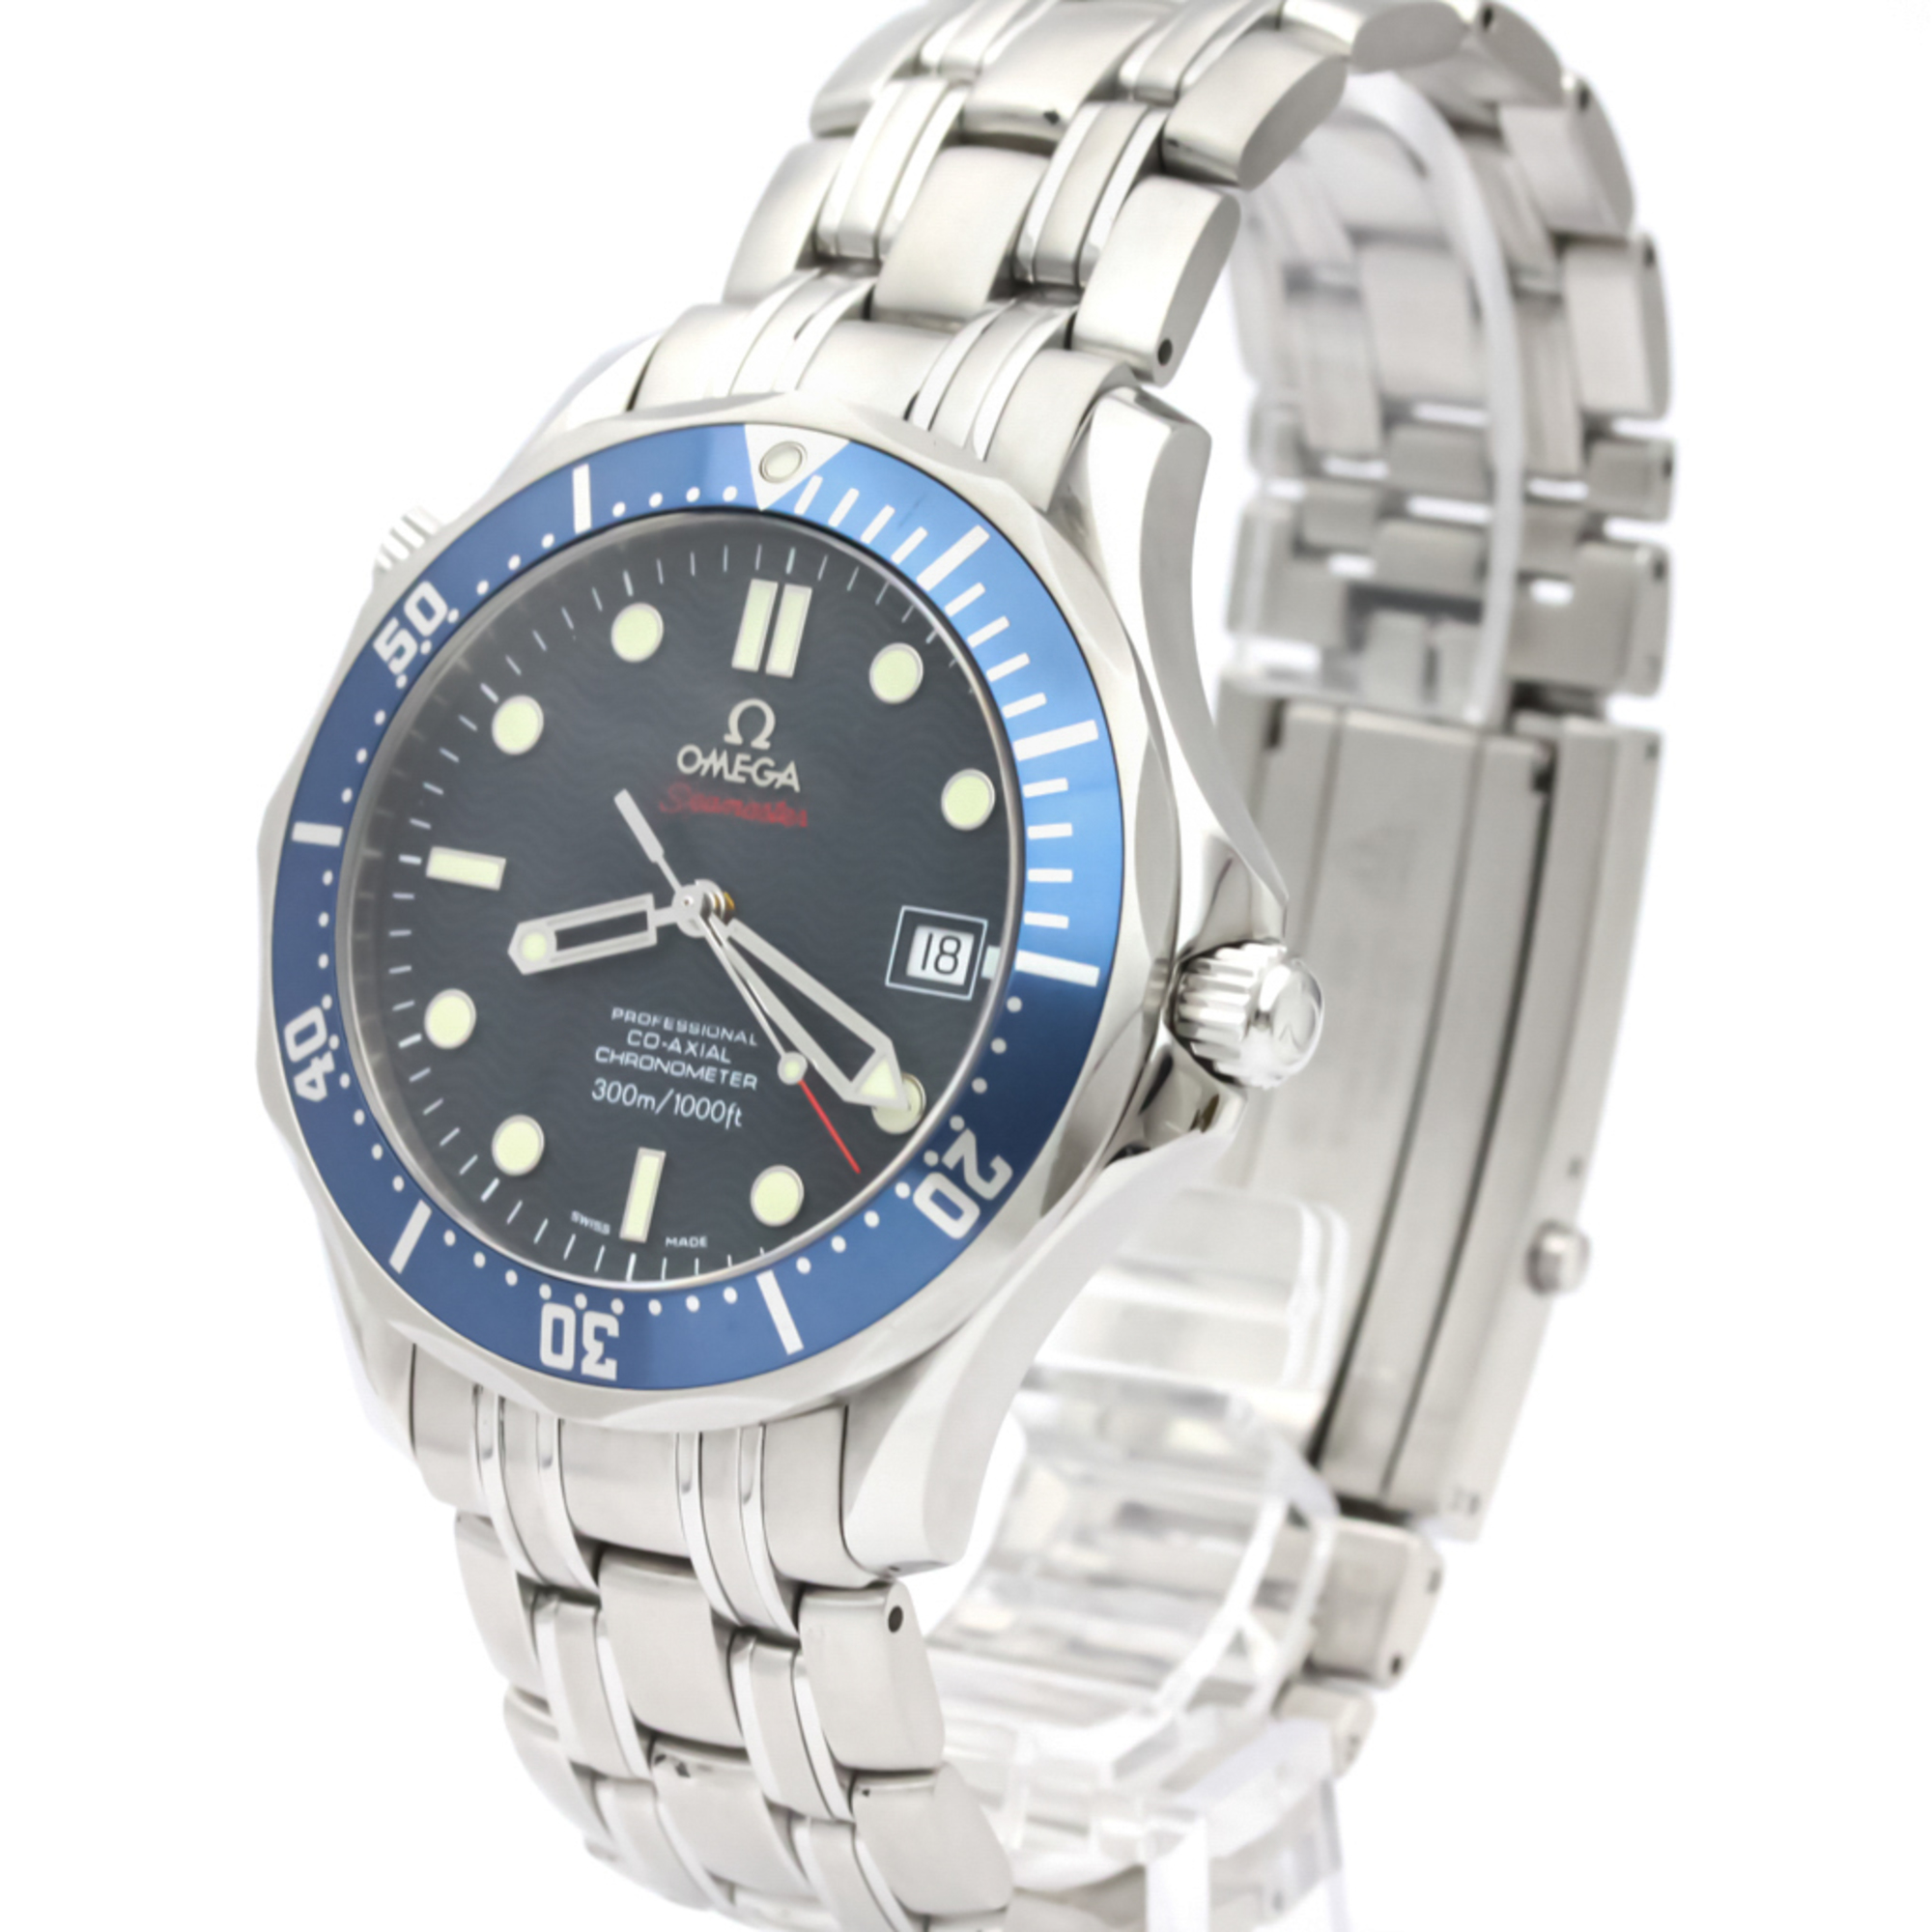 OMEGA Seamaster Professional 300M Automatic Mens Watch 2220.80